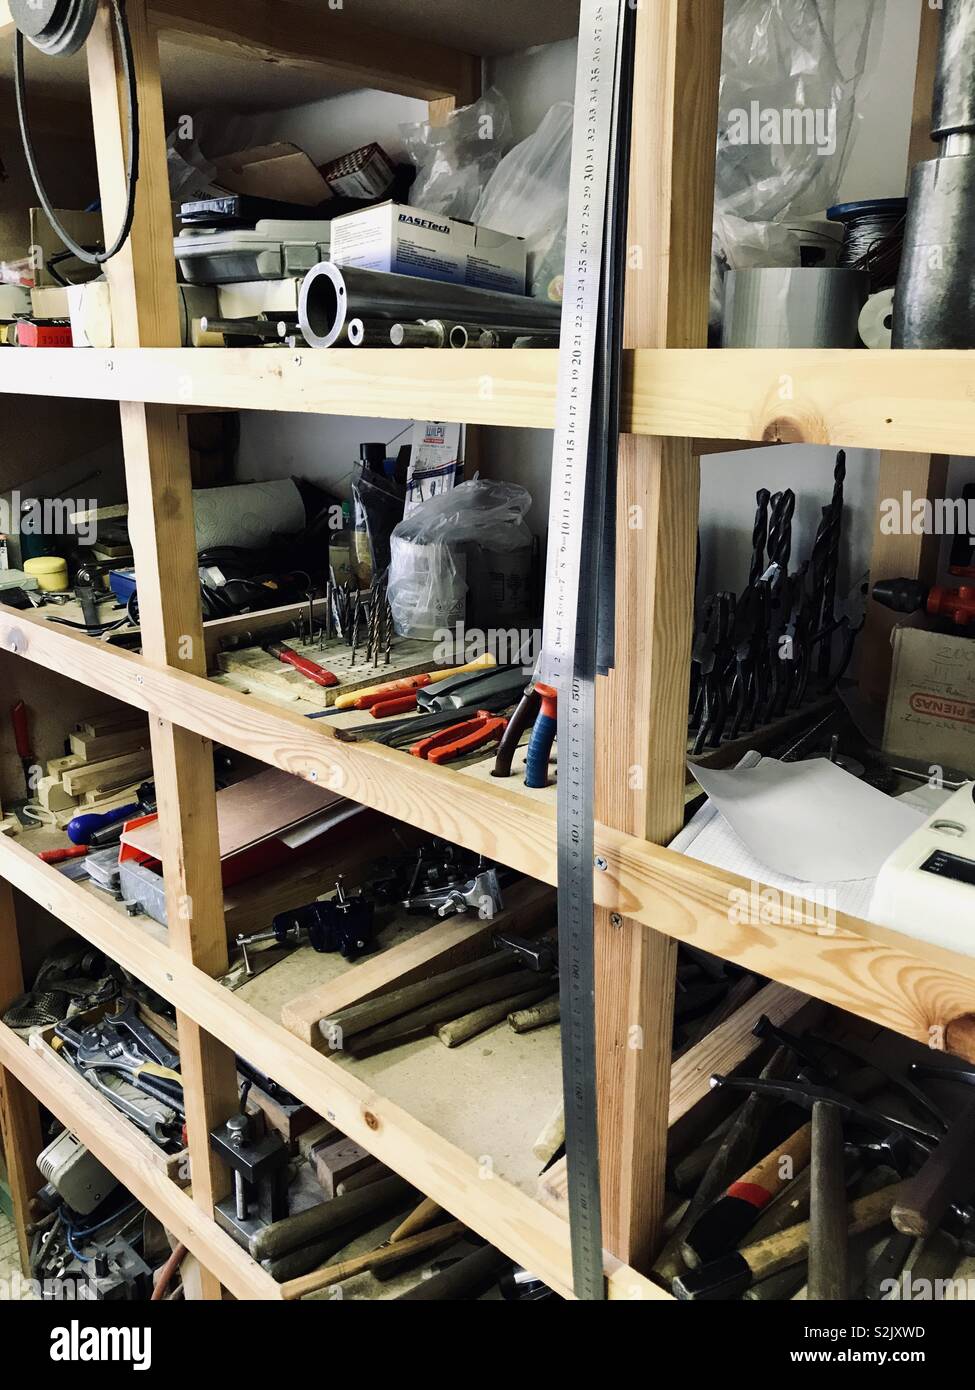 Metal Workshop Tool Shelf. Work space organizing Stock Photo